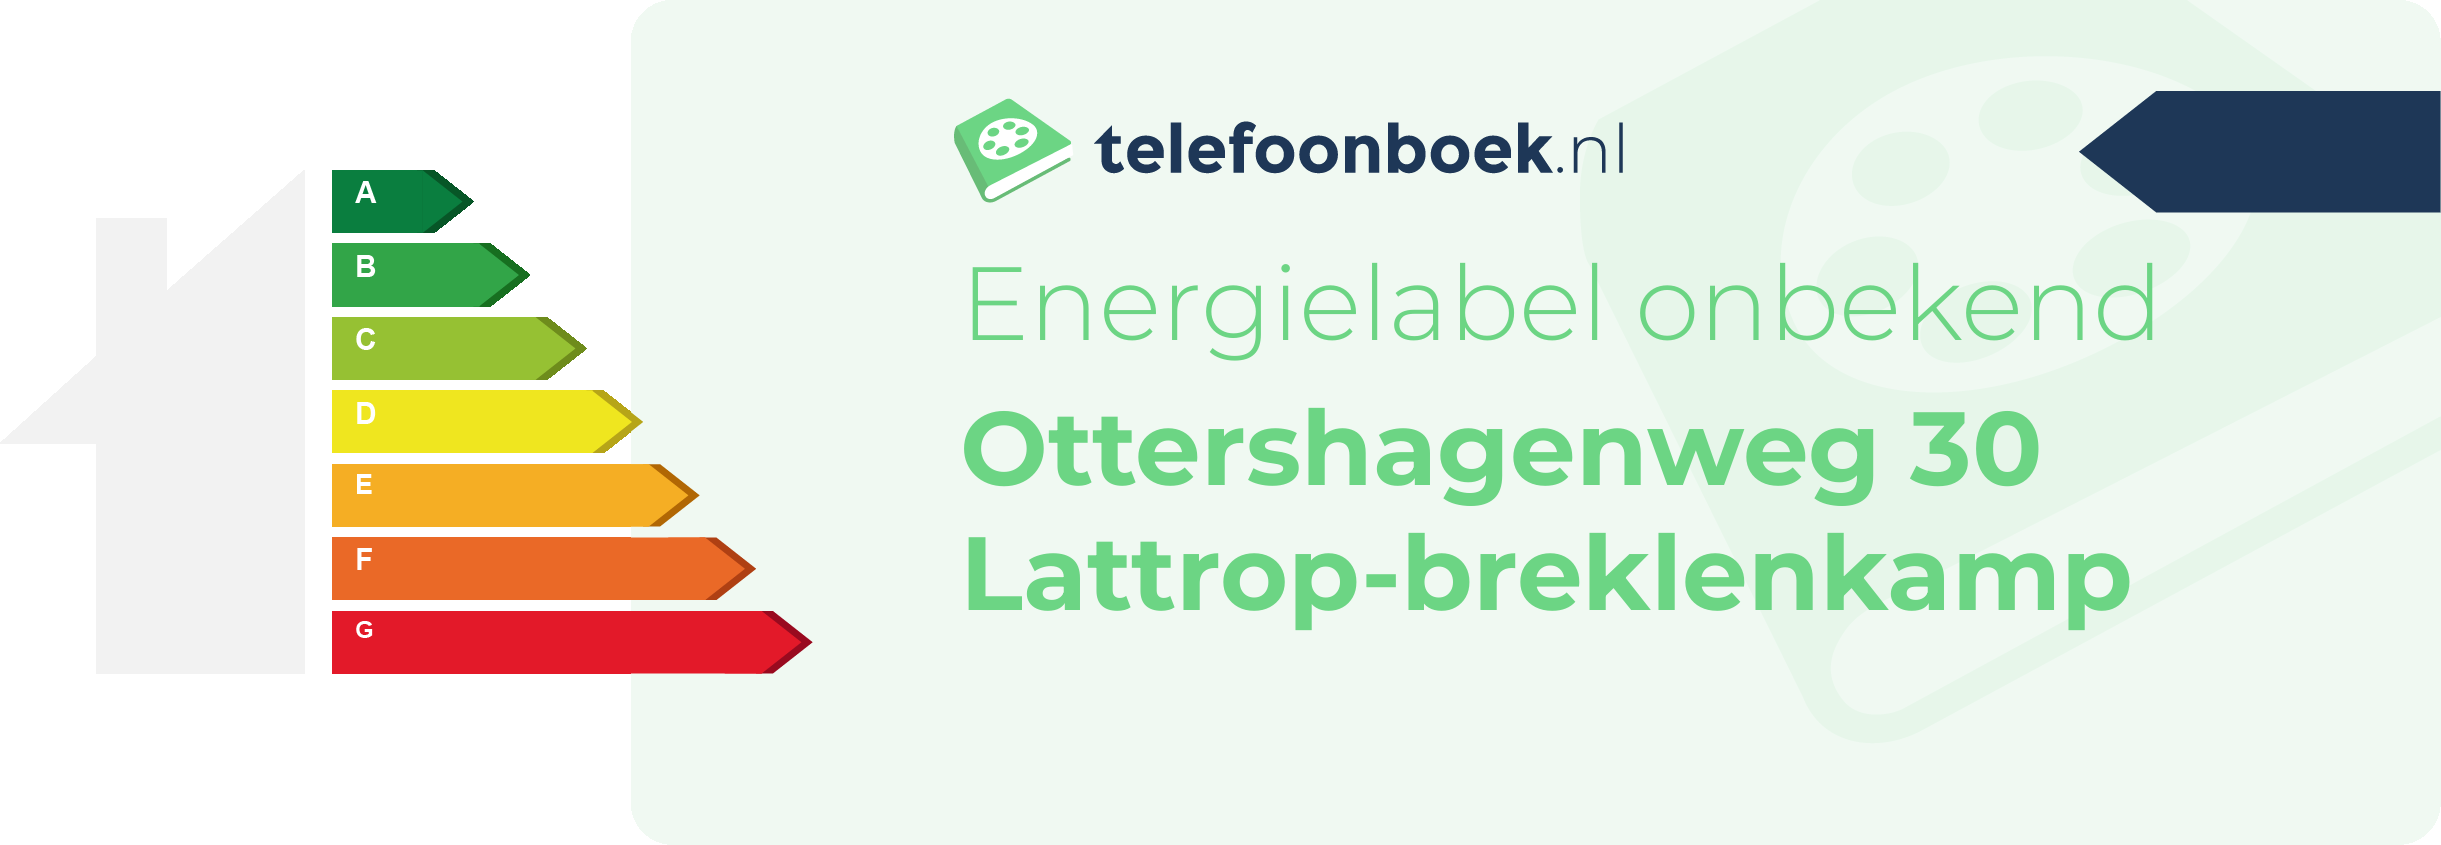 Energielabel Ottershagenweg 30 Lattrop-Breklenkamp